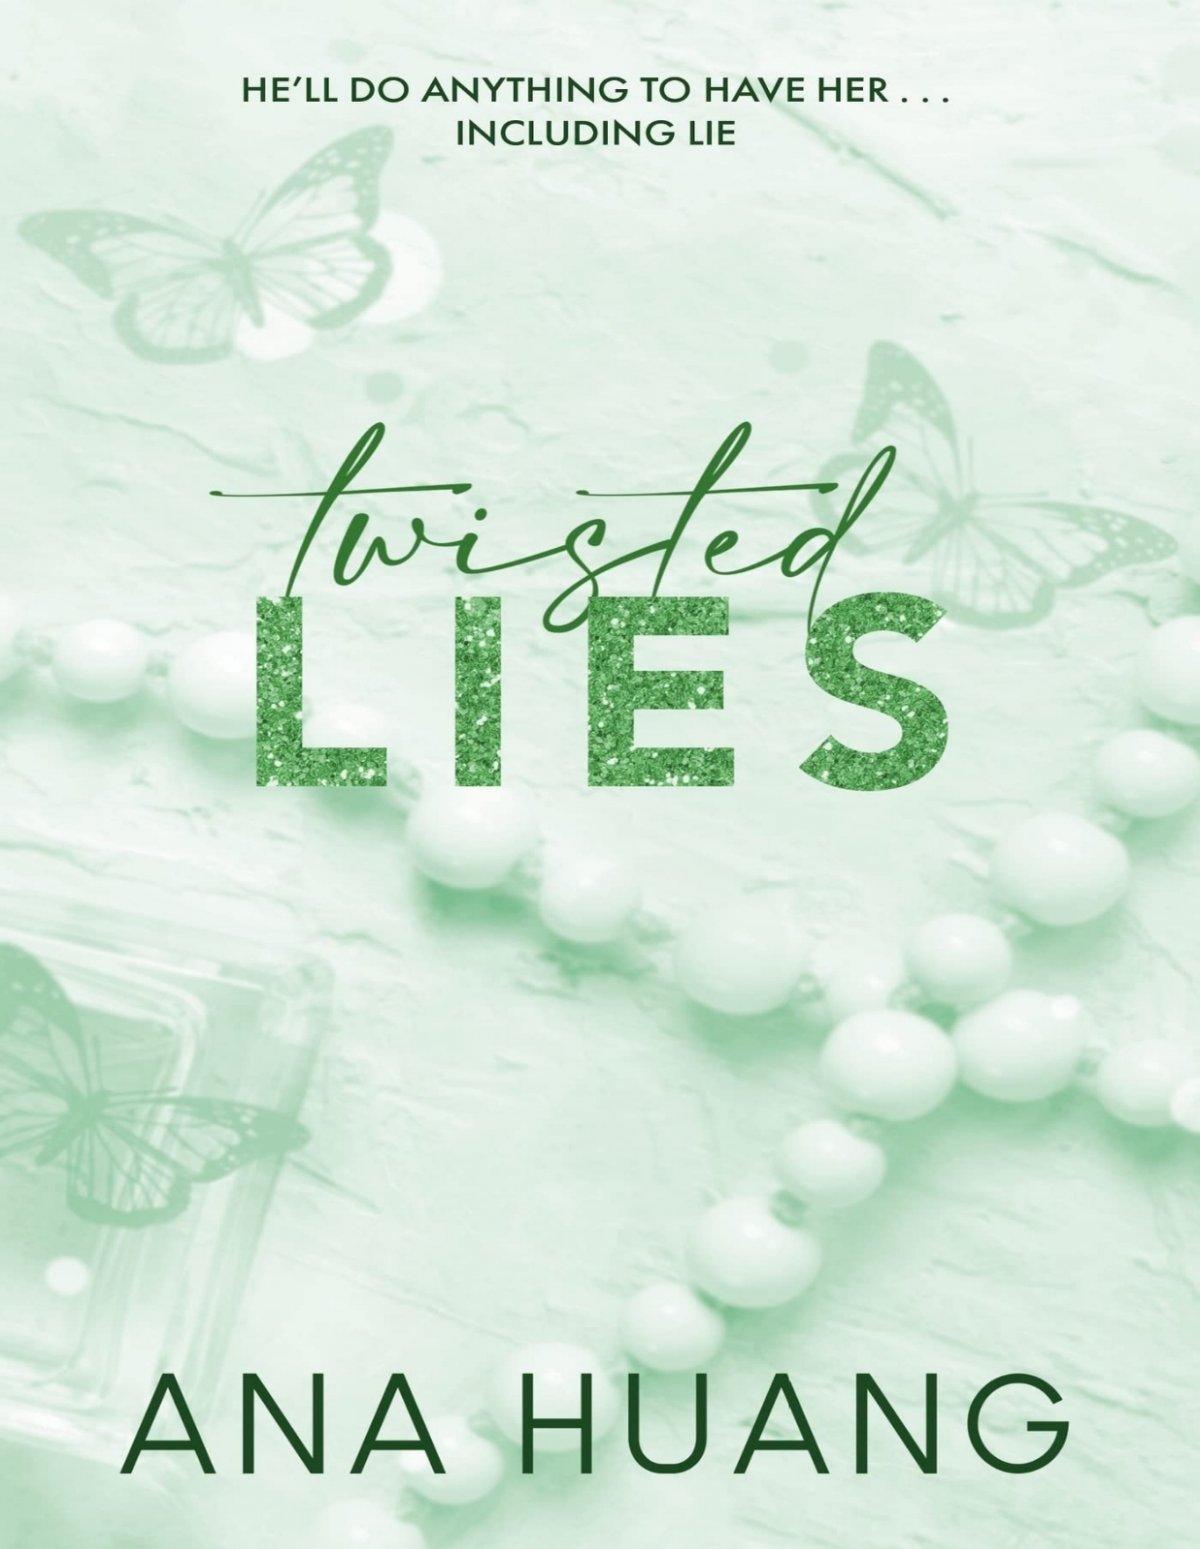 Twisted Lies Audiolibros por Ana Huang - Muestra gratis